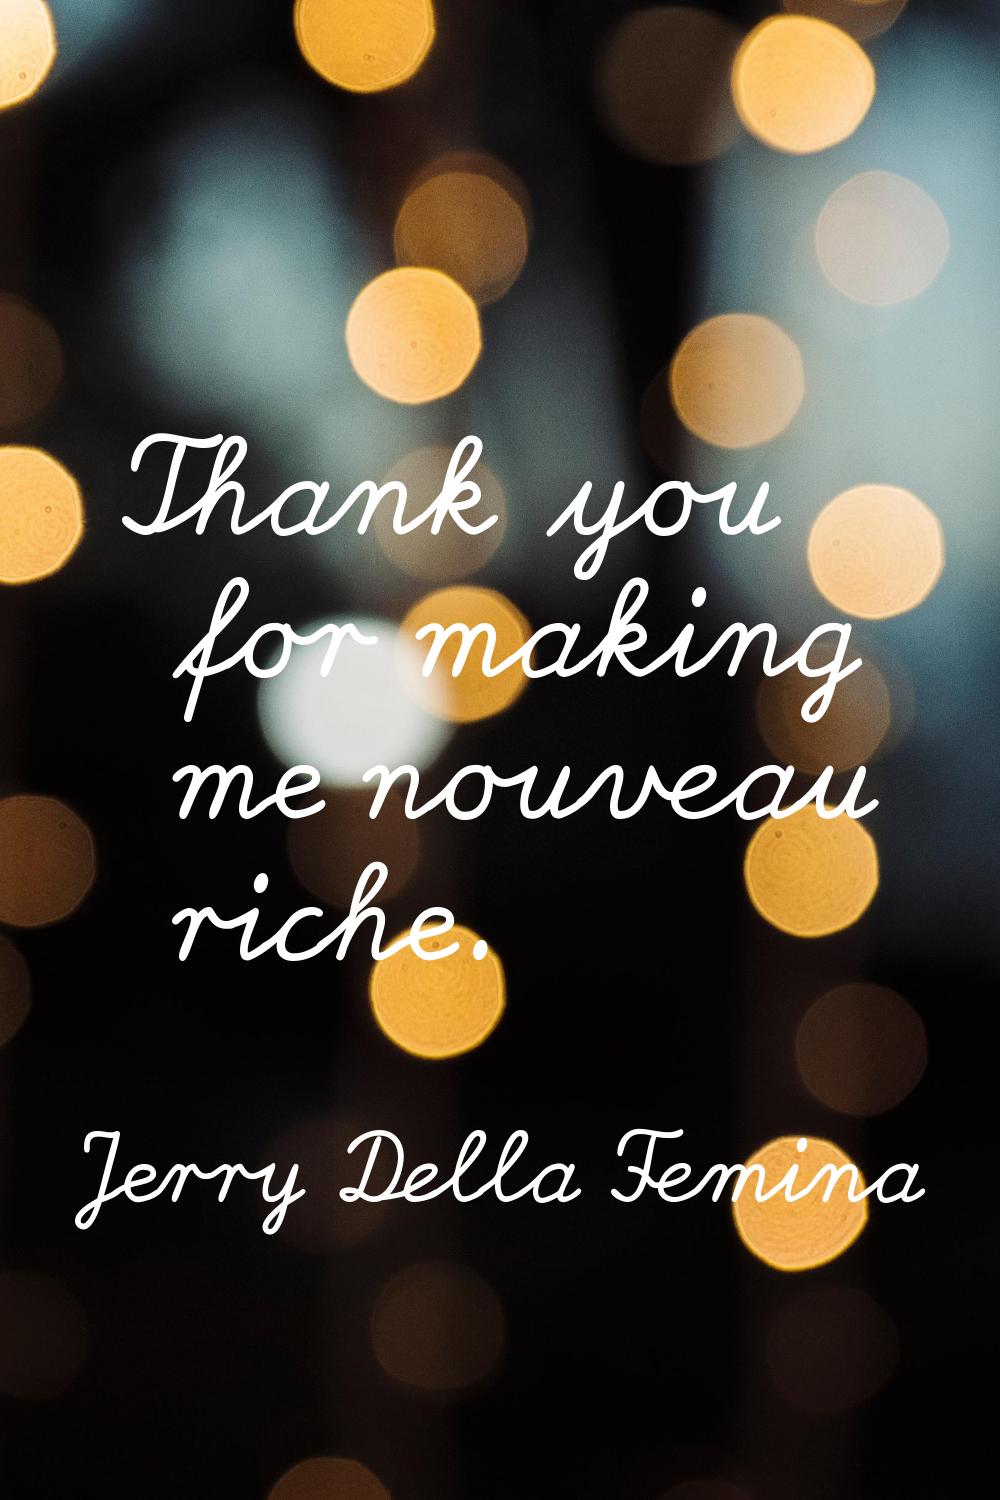 Thank you for making me nouveau riche.